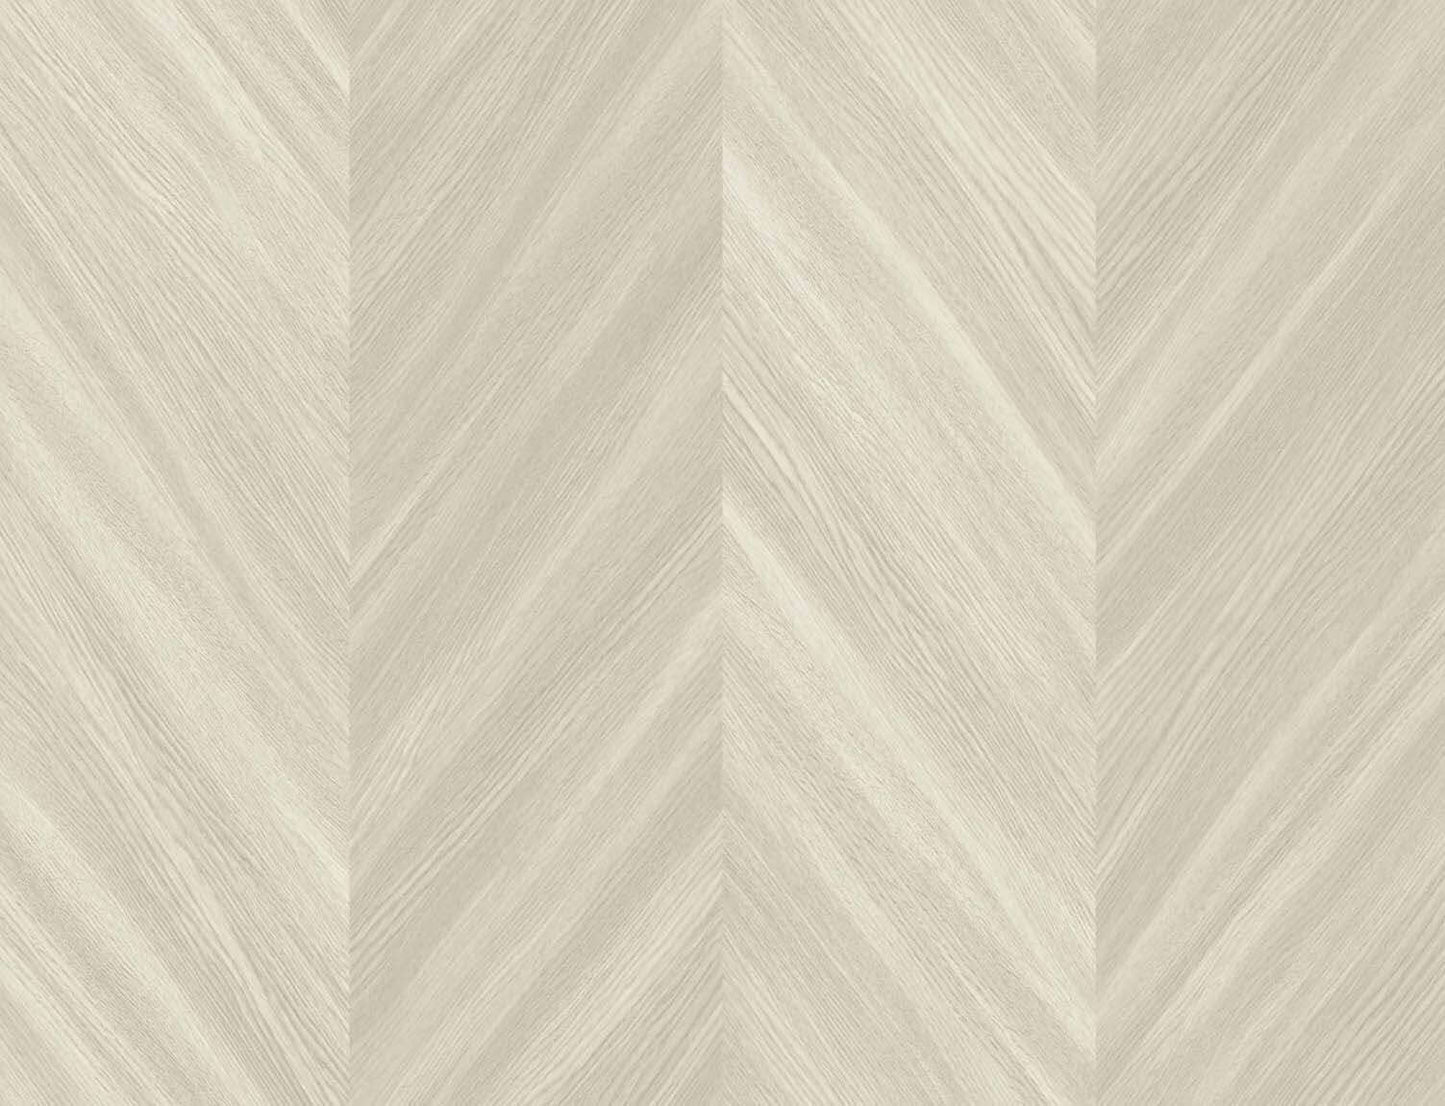 Seabrook Even More Textures Chevron Wood Wallpaper - Bister